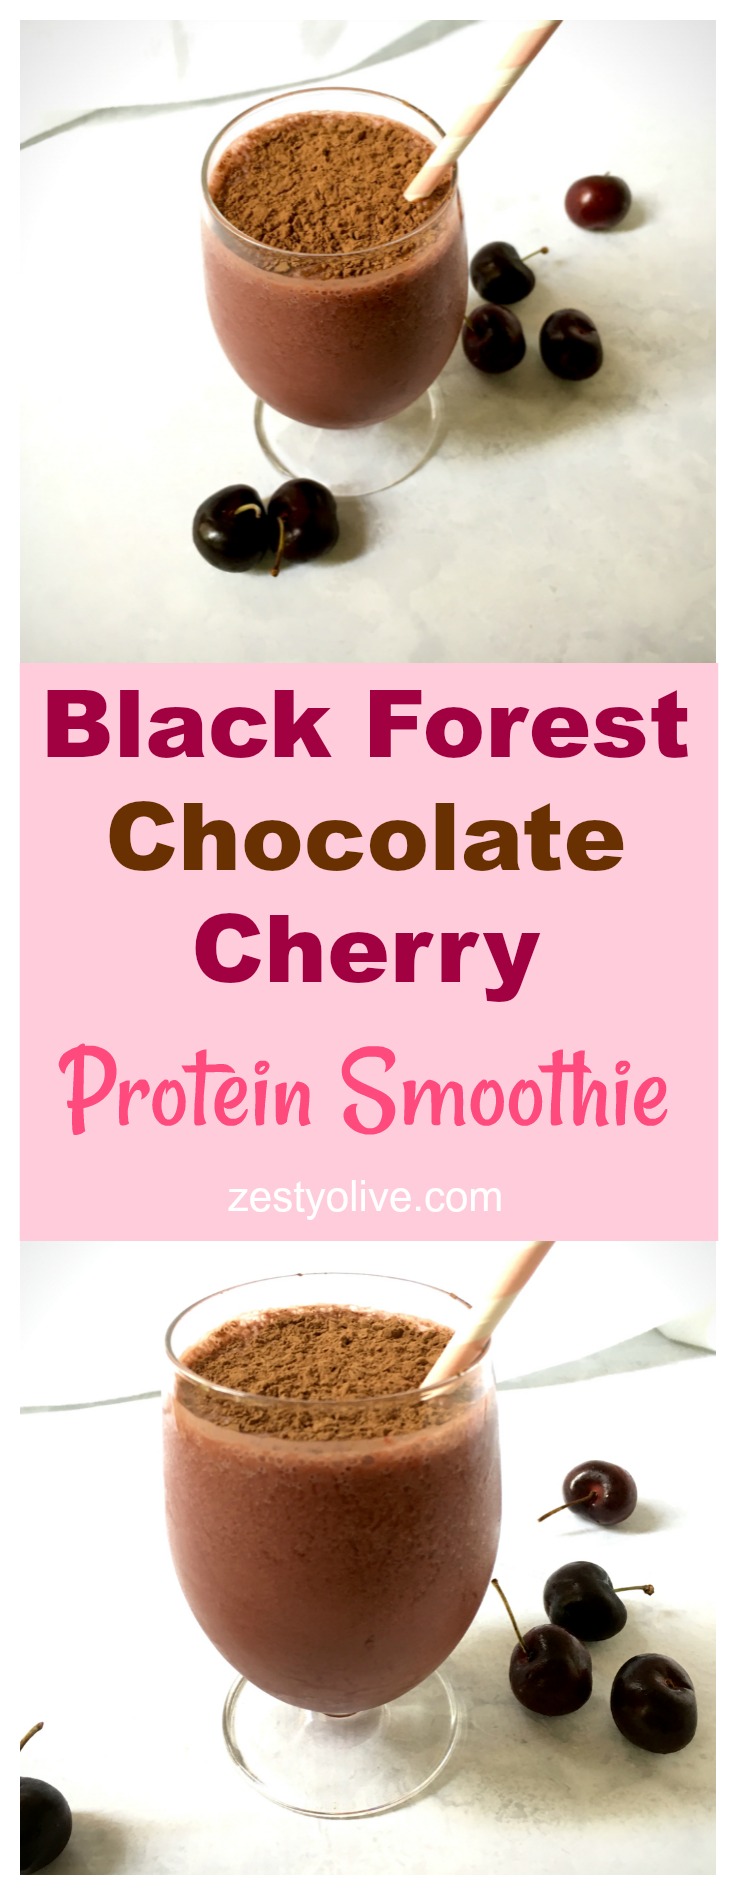 Black Forest Chocolate Cherry Protein Smoothie